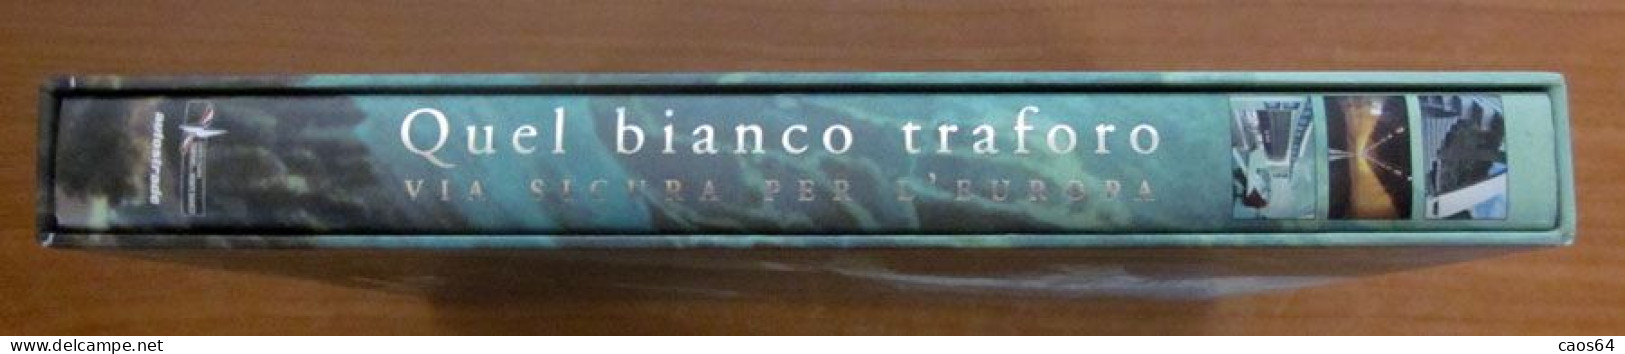 Quel Bianco Traforo Via Sicura Per L'Europa Autostrade 2002 - Geschiedenis, Biografie, Filosofie